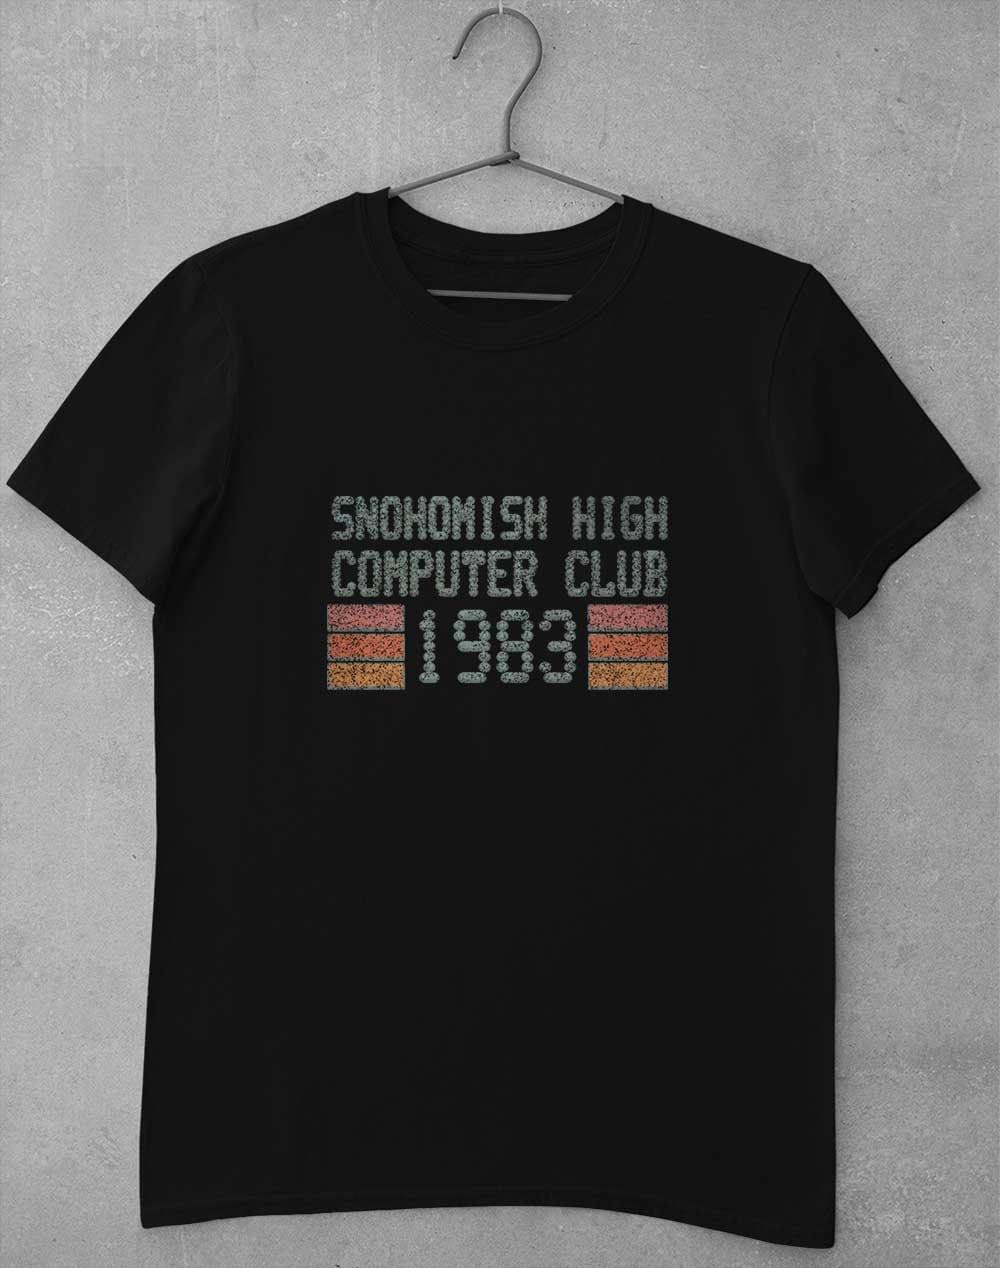 Snohomish High Computer Club 1983 T-Shirt S / Black  - Off World Tees